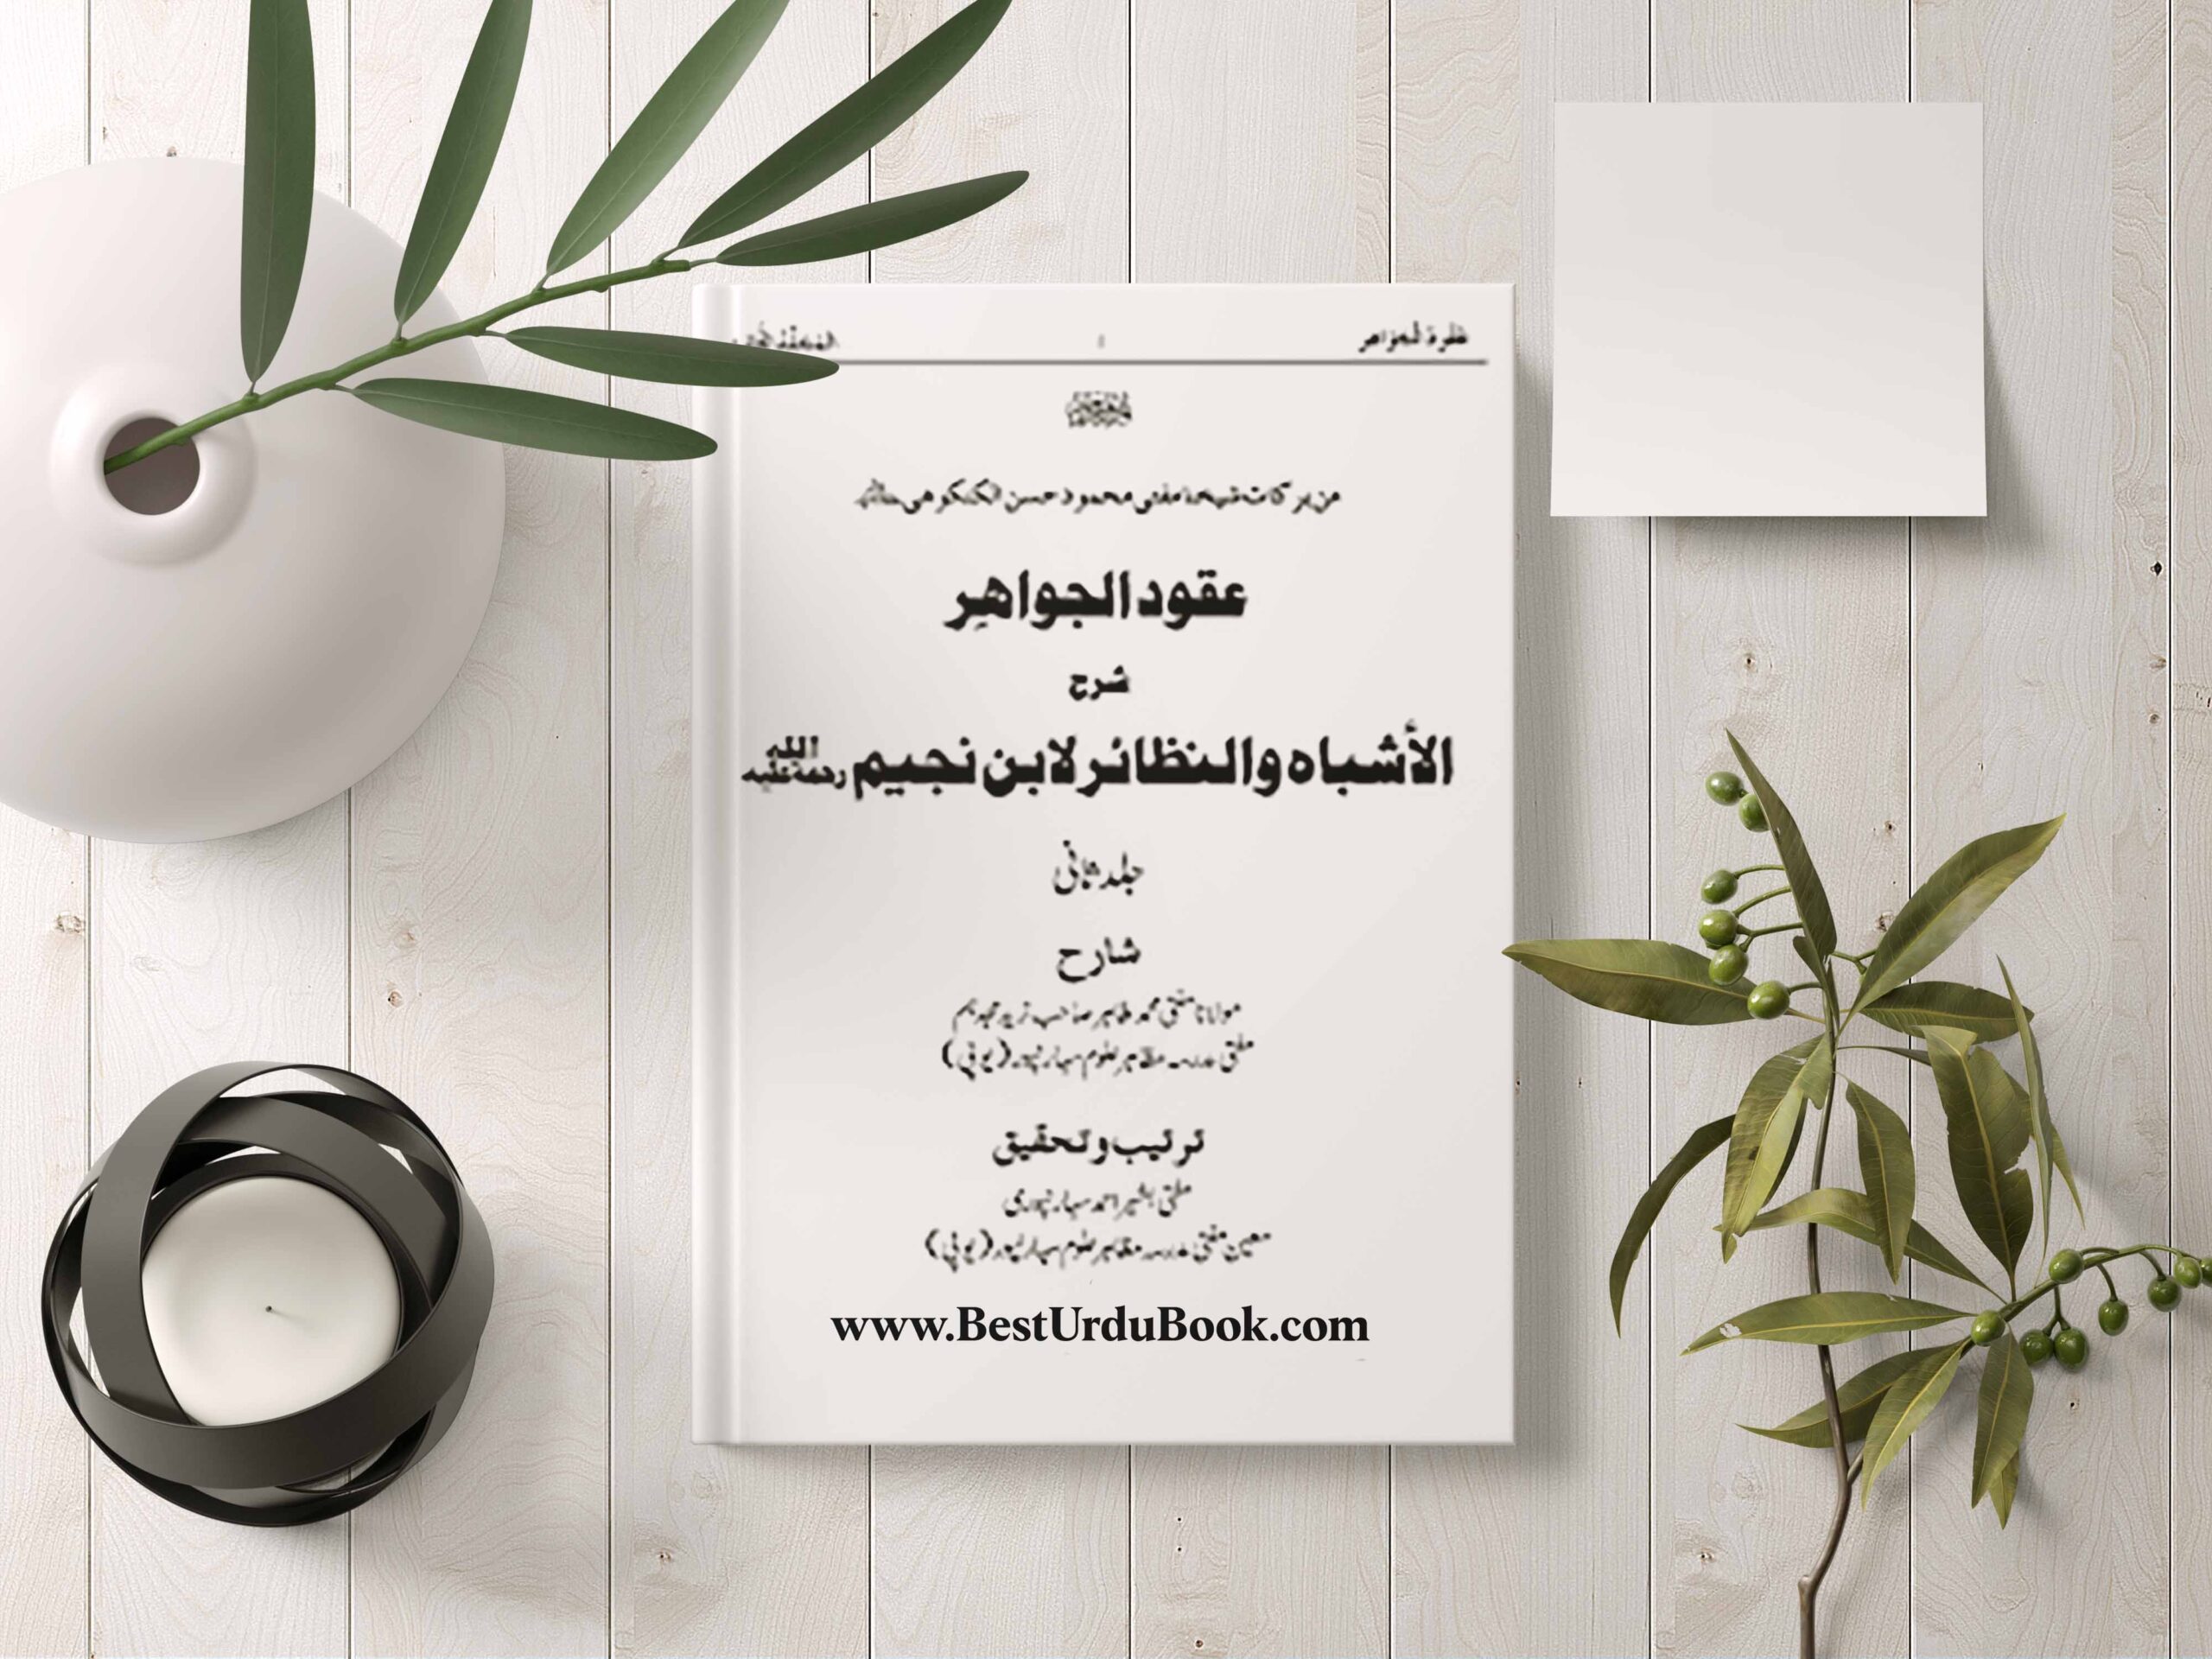 Uqood ul Jawahir Sharha Al Ashbah wa Al Nazair Book Download In Urdu & pdf format